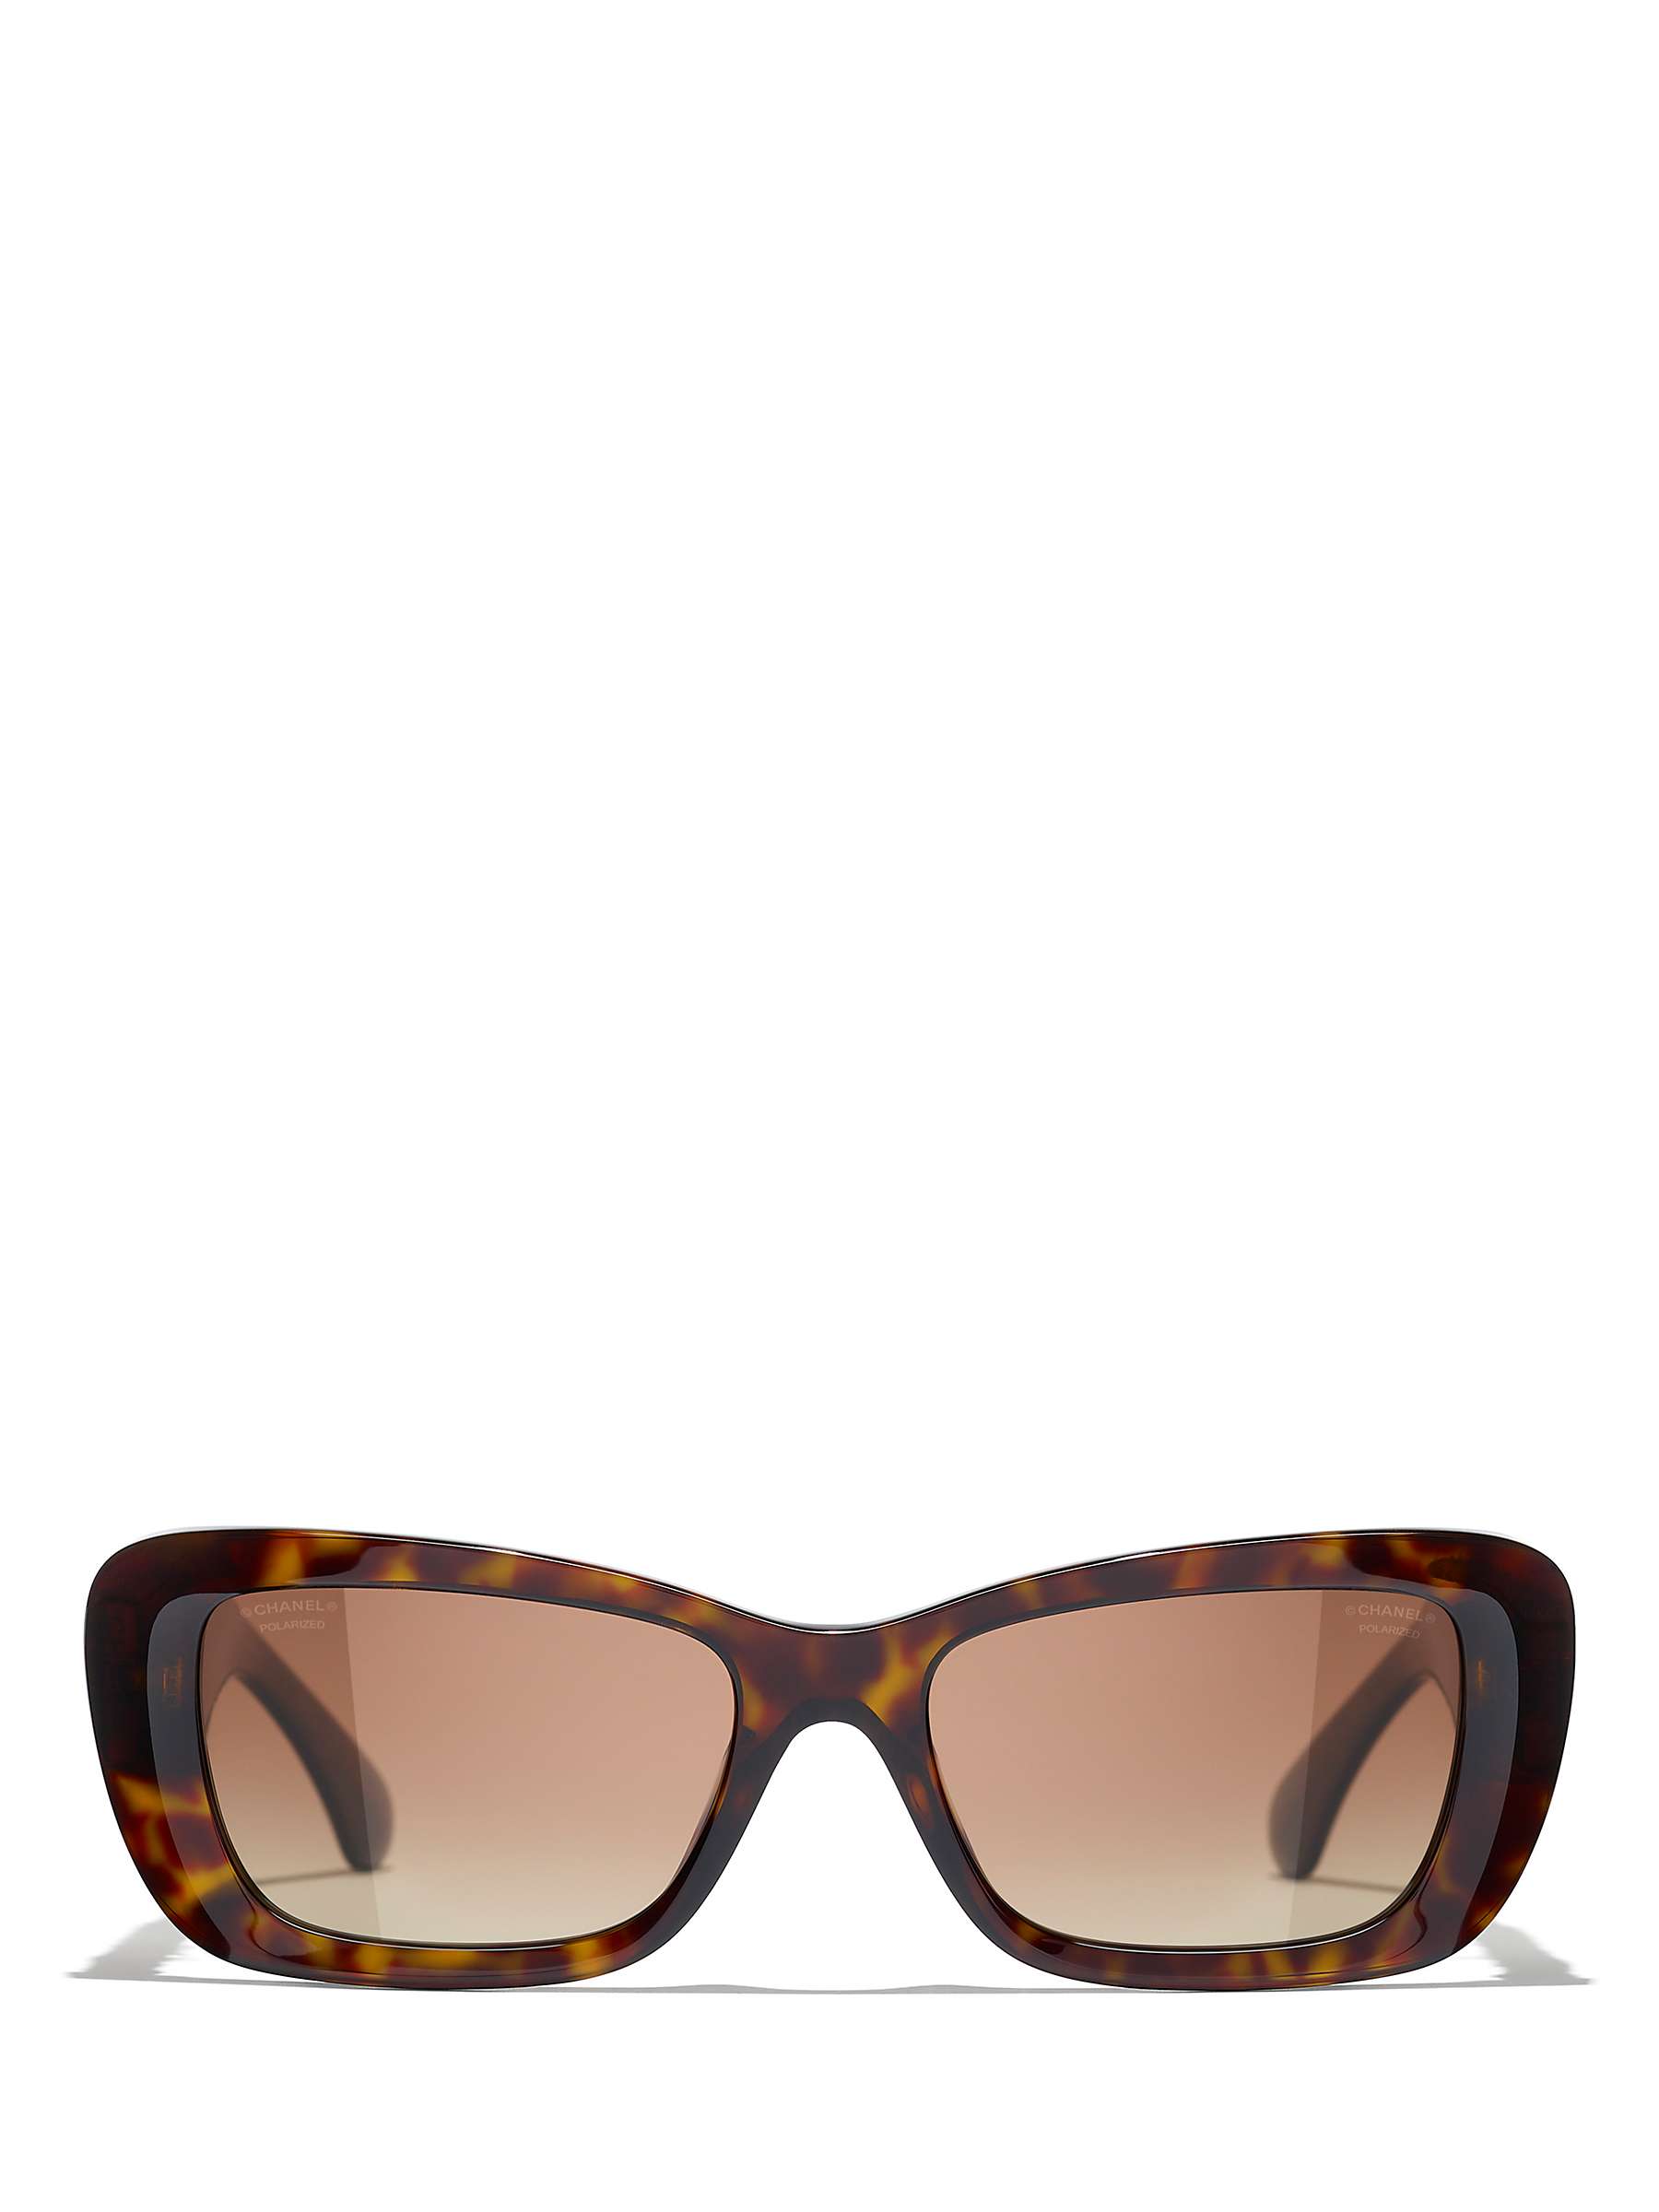 Buy CHANEL Rectangular Sunglasses CH5514 Dark Havana/Brown Gradient Online at johnlewis.com